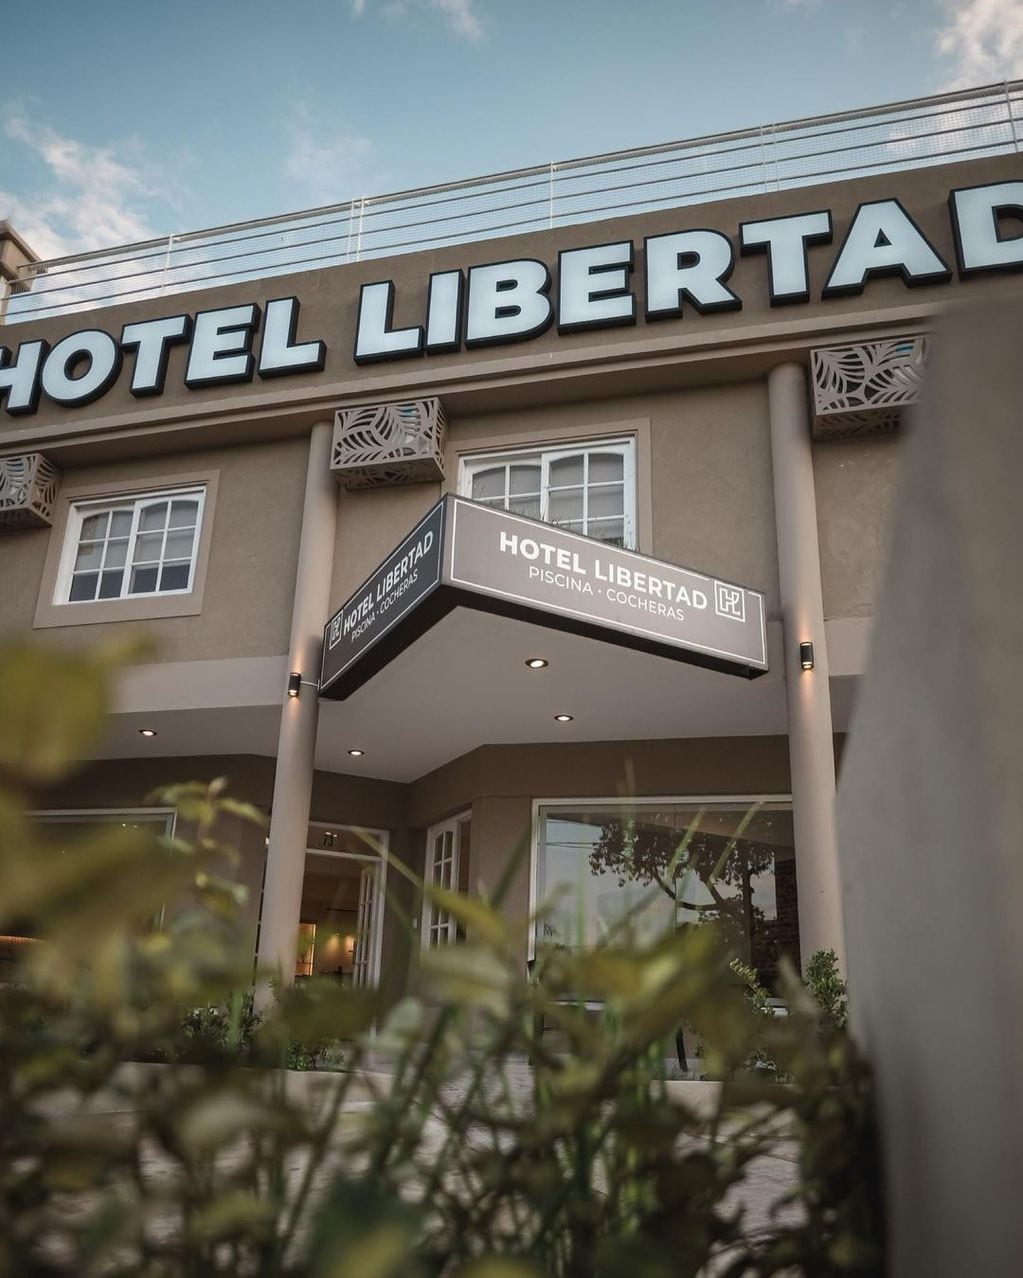 Hotel Libertad.